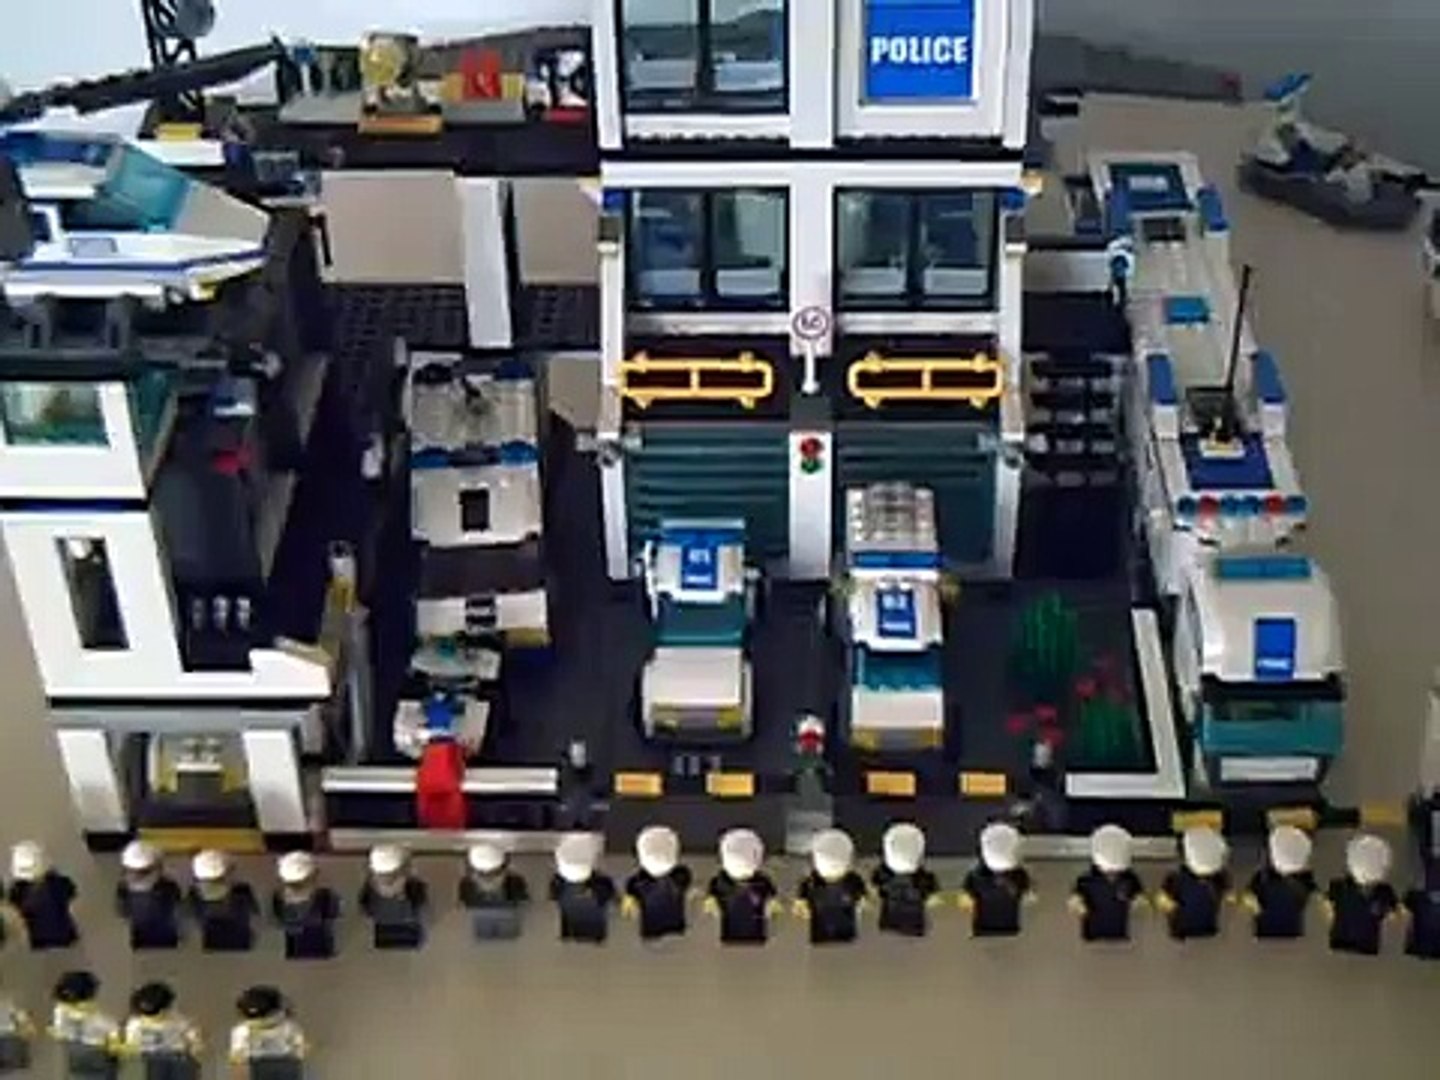 Lego City #7744 Police Headquarters